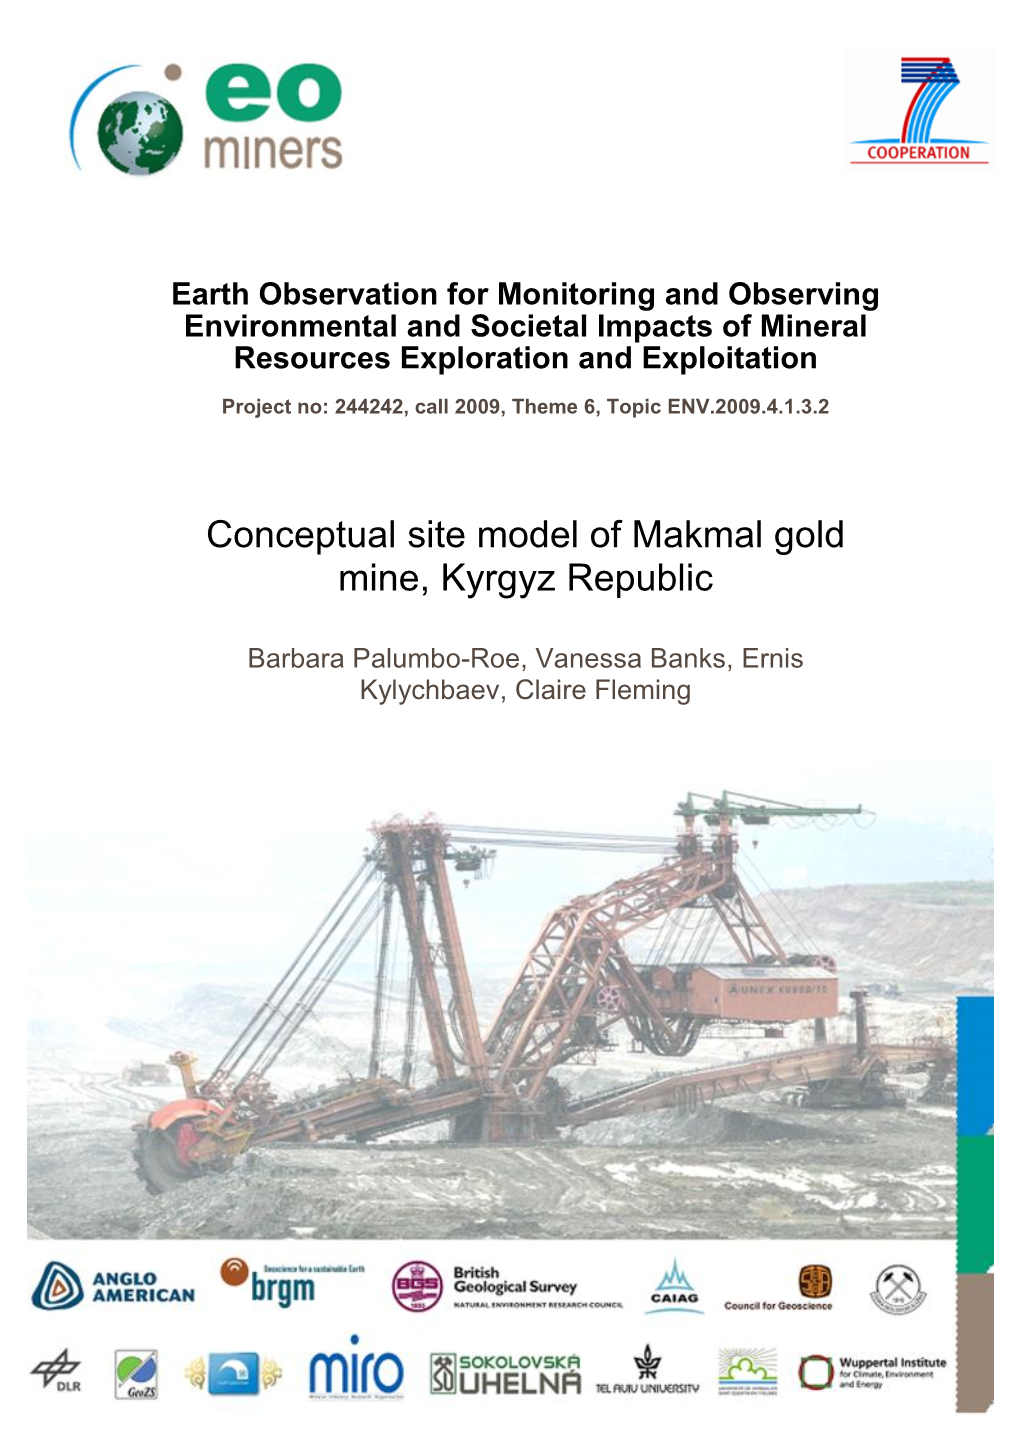 Conceptual Site Model of Makmal Gold Mine, Kyrgyz Republic